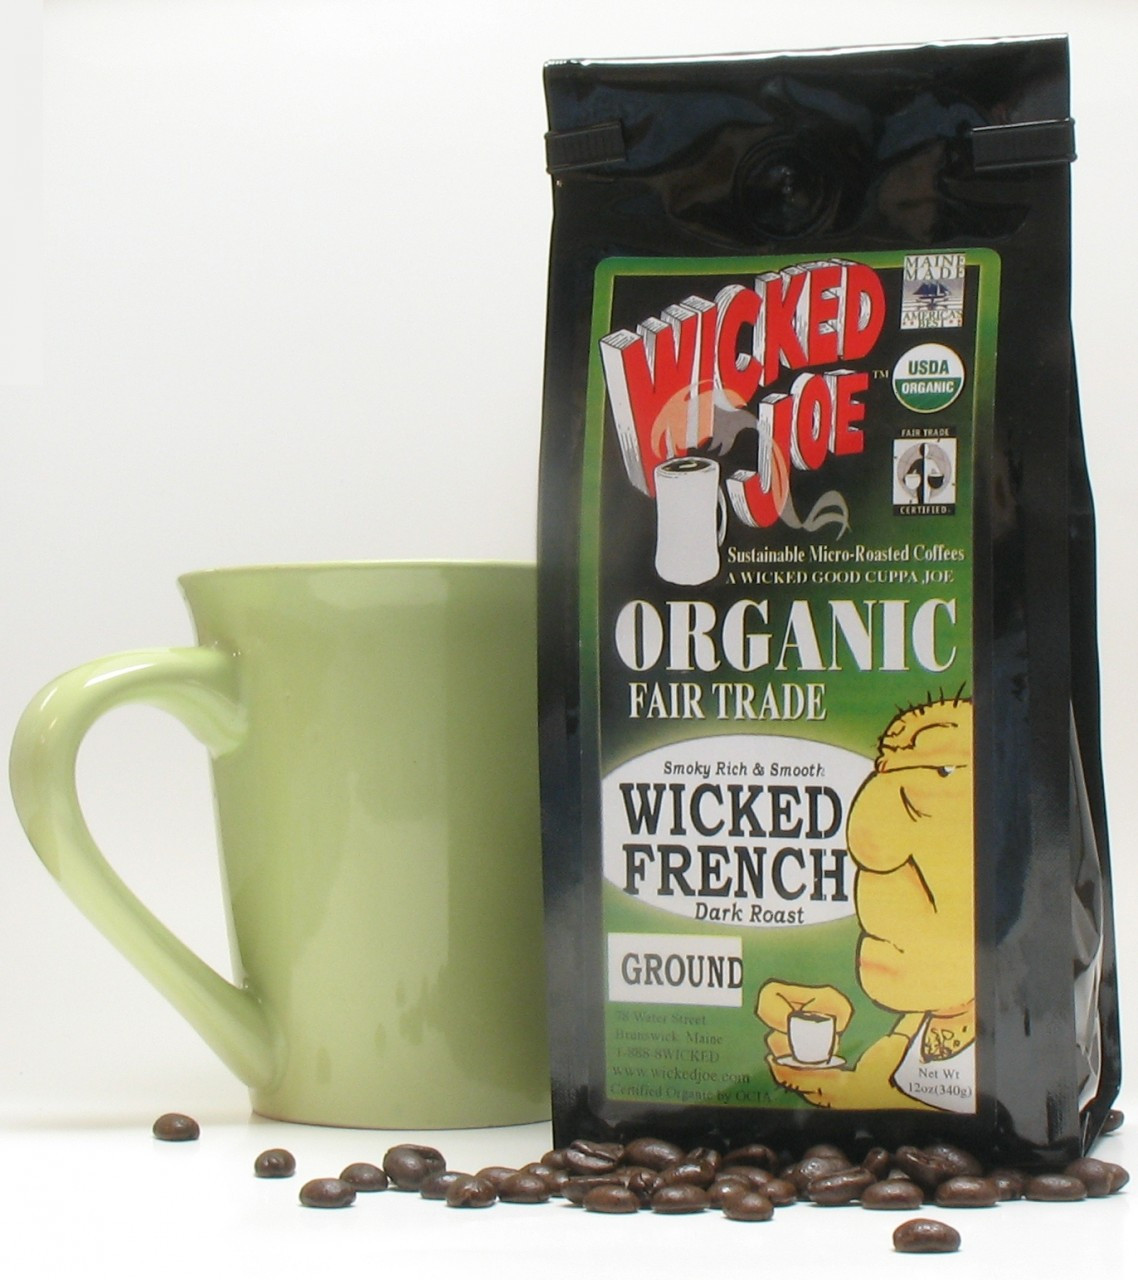 Wicked Joe Organic Fair Trade Smoky Rich & Smooth Wicked French Dark Roast, 12 oz
